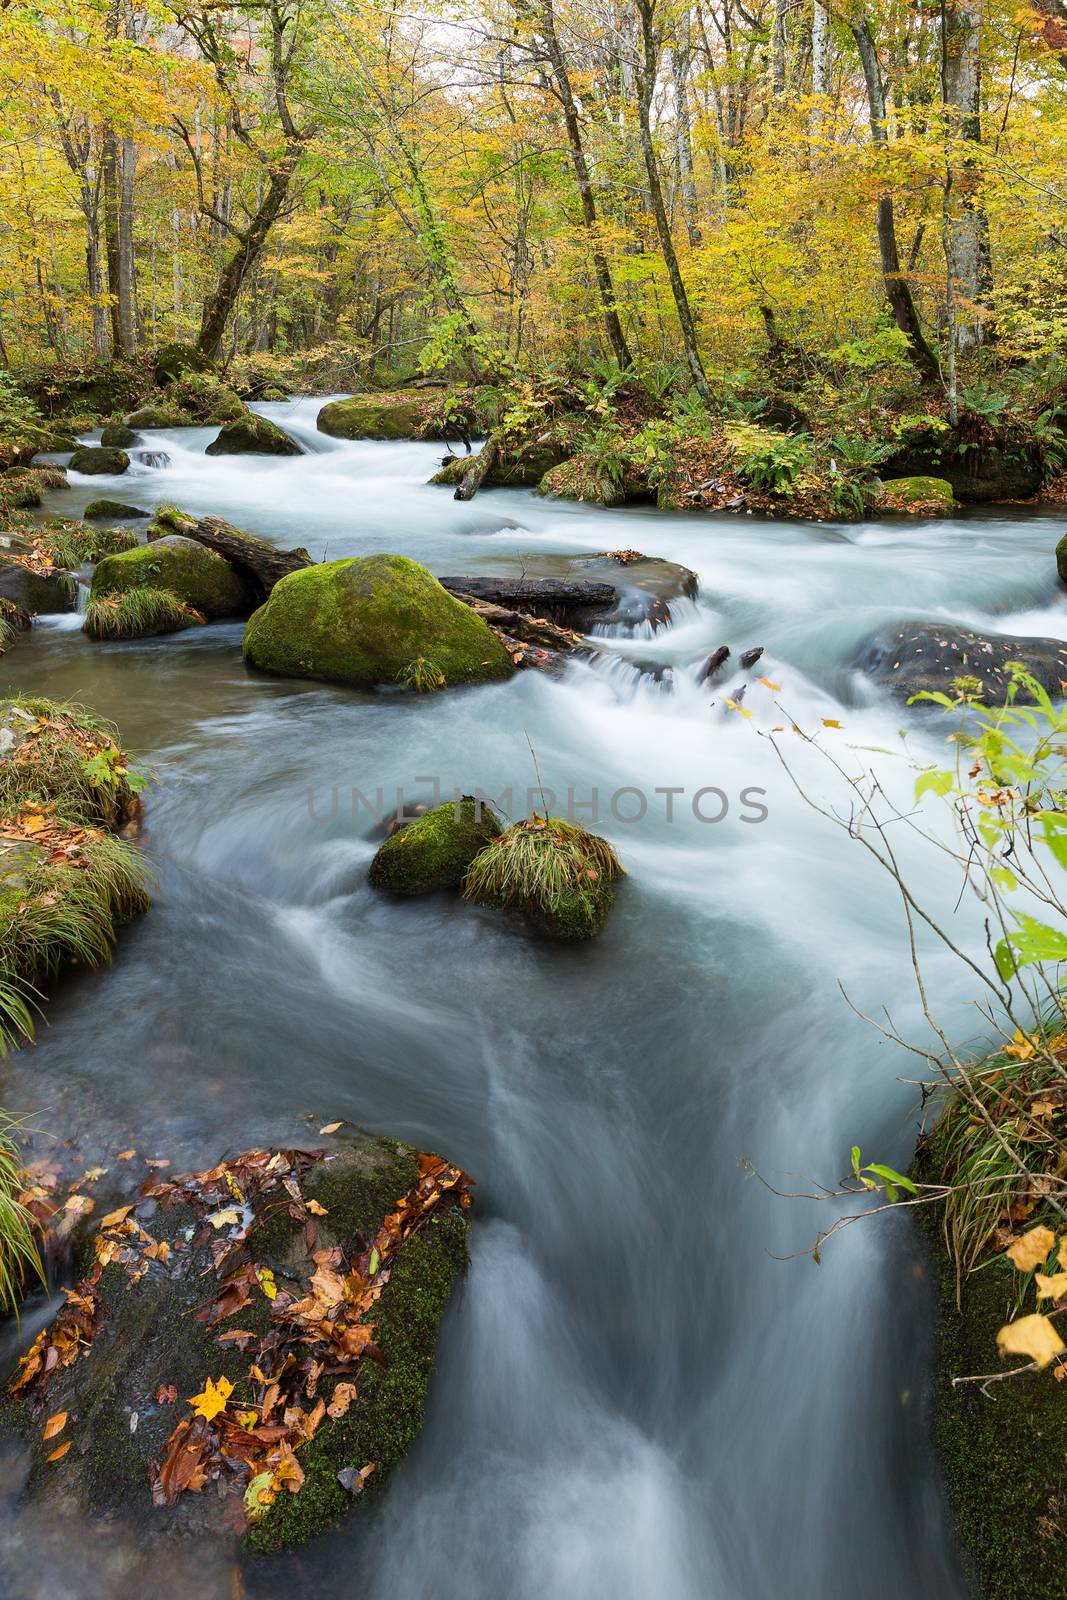 Oirase Stream in autumn of Japan by leungchopan